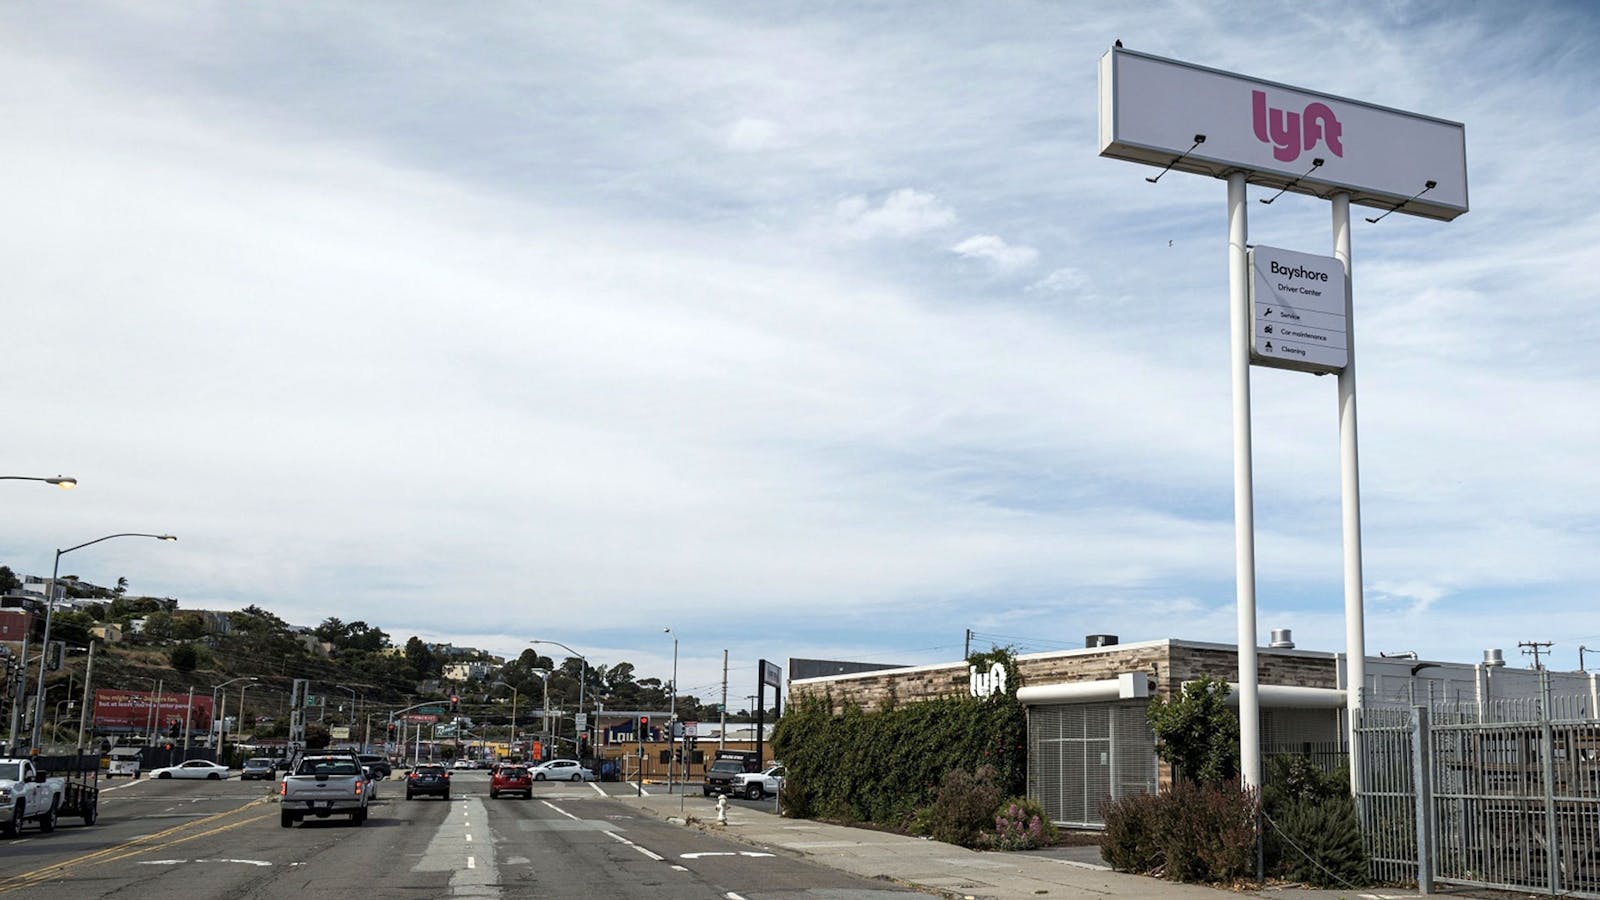 Lyft's San Francisco driver hub. Photo by Bloomberg.